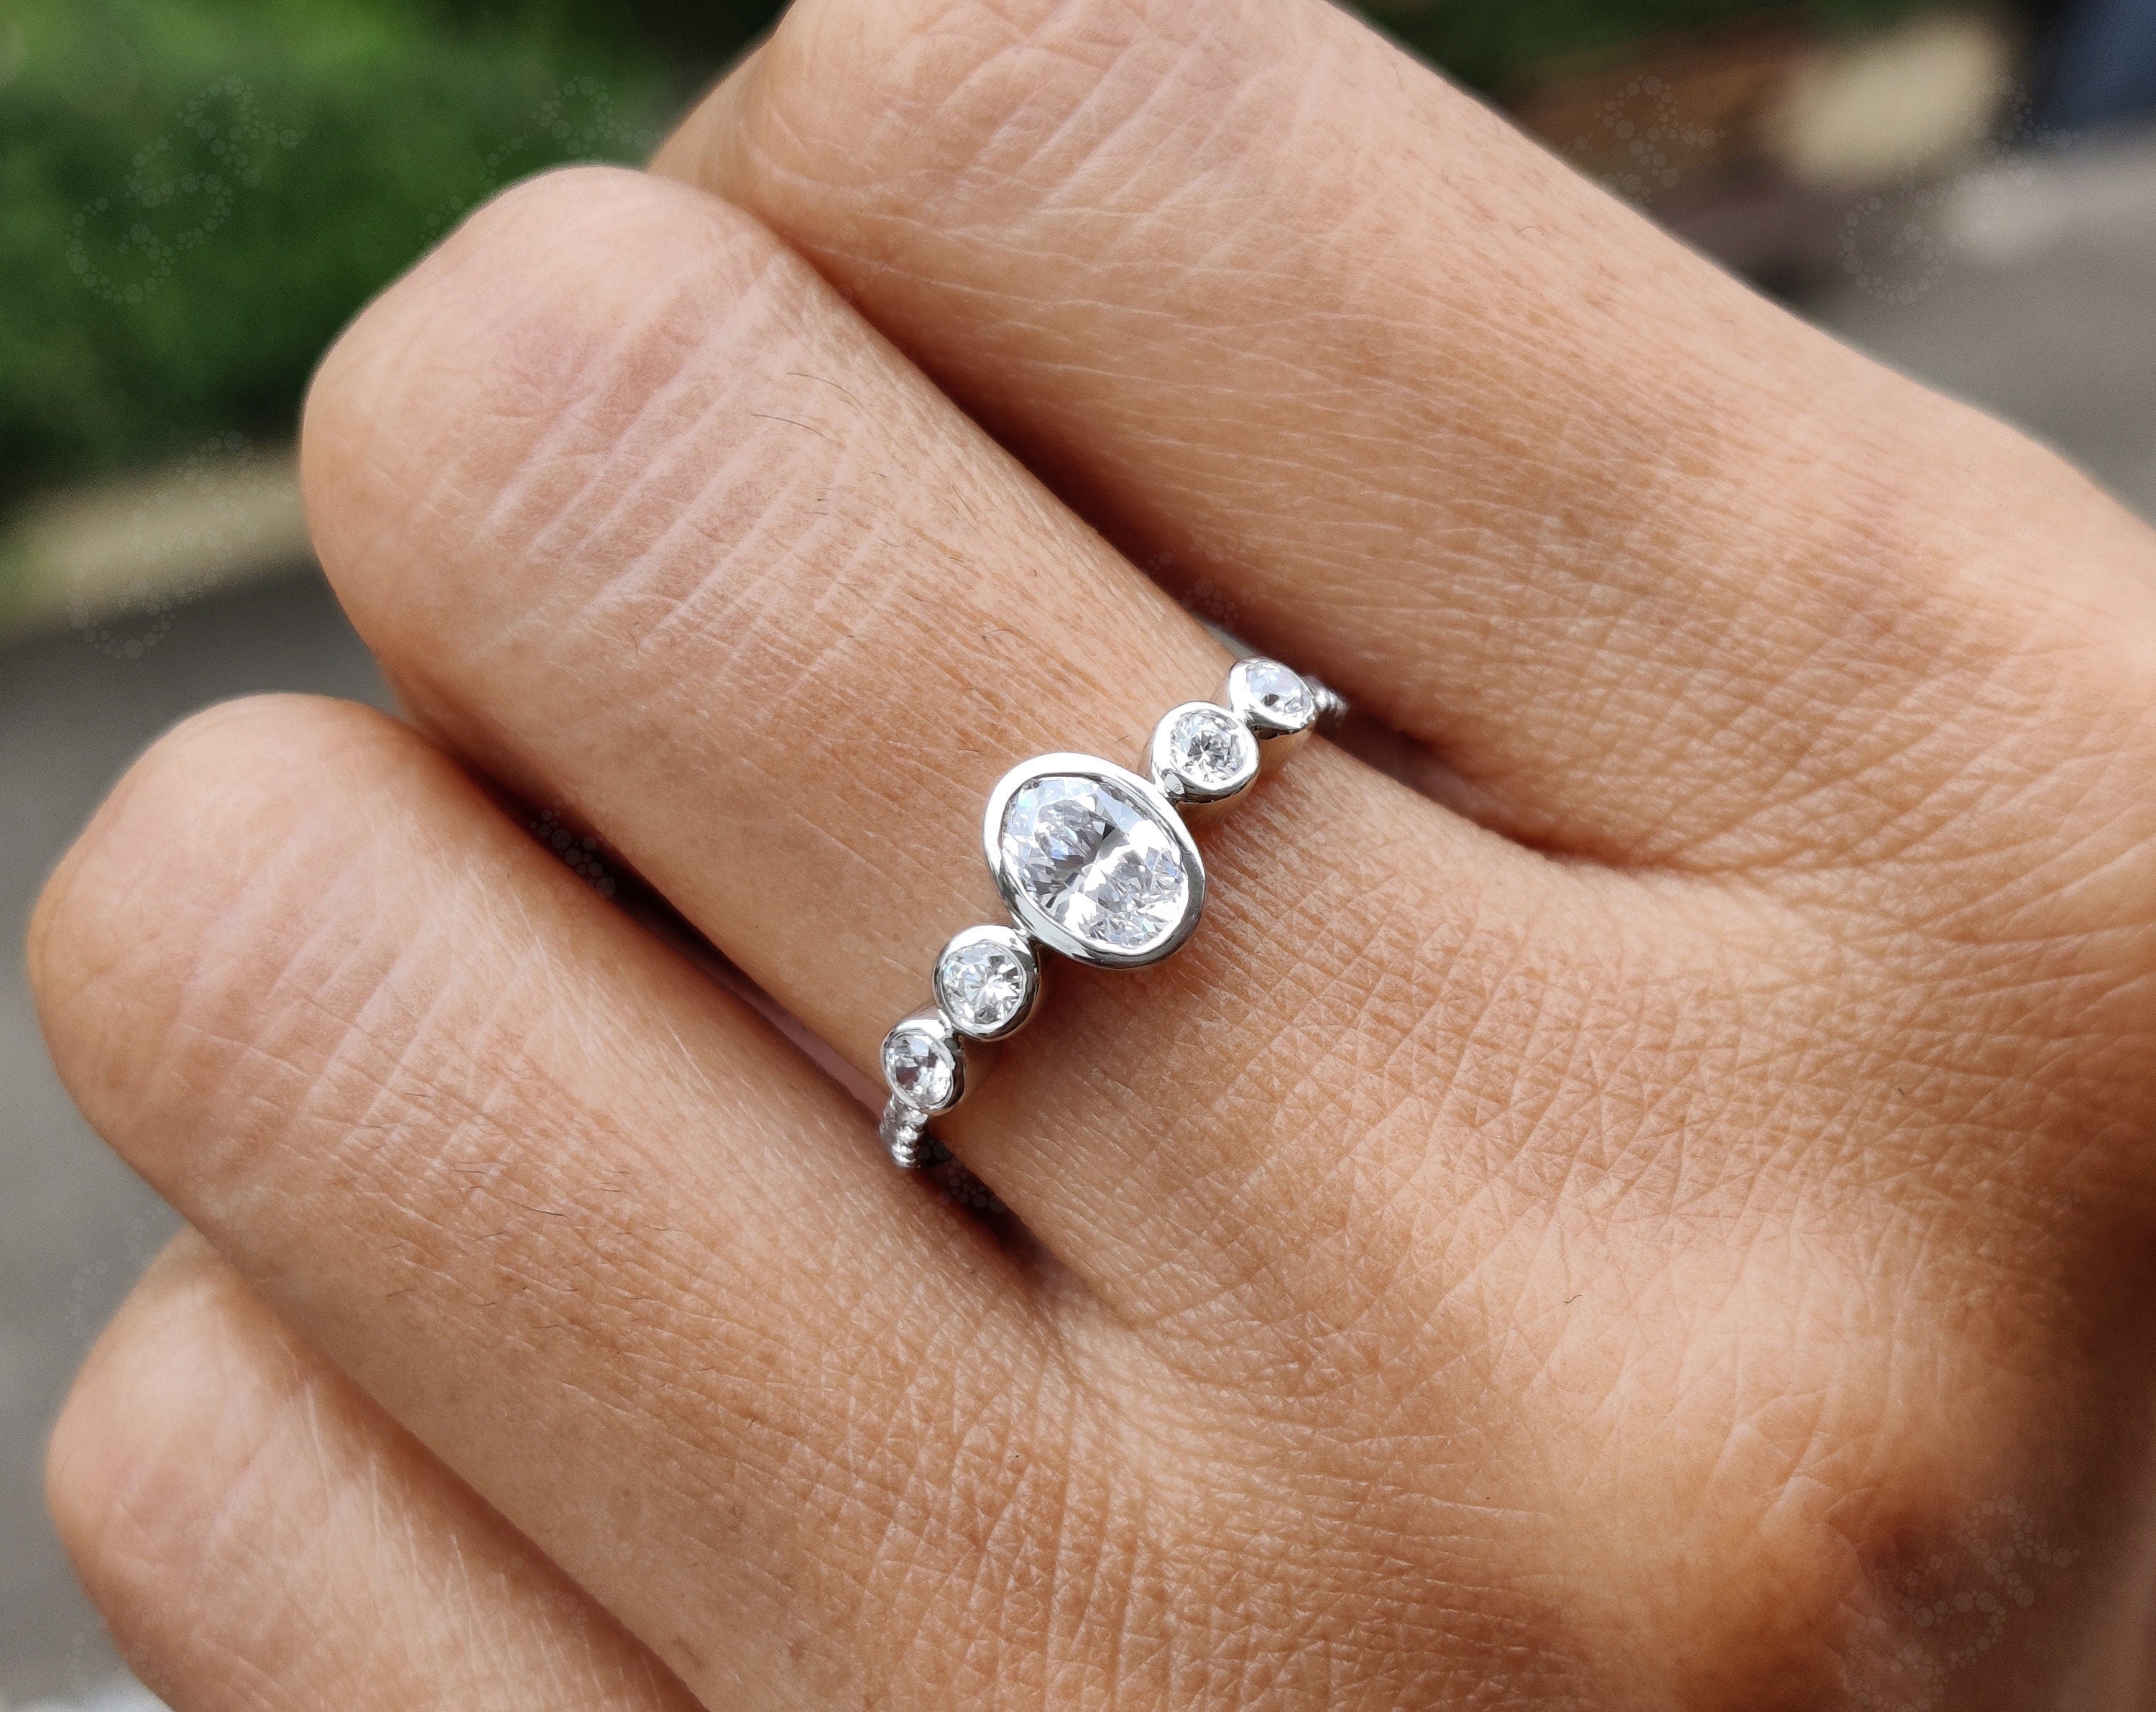 Elegant 5 Stone Oval Engagement Ring - Silver and Gold Minimalist Beauty - Moissanite Diamond Bezel Set Ring - Rings for Women - Dainty Wedding Ring